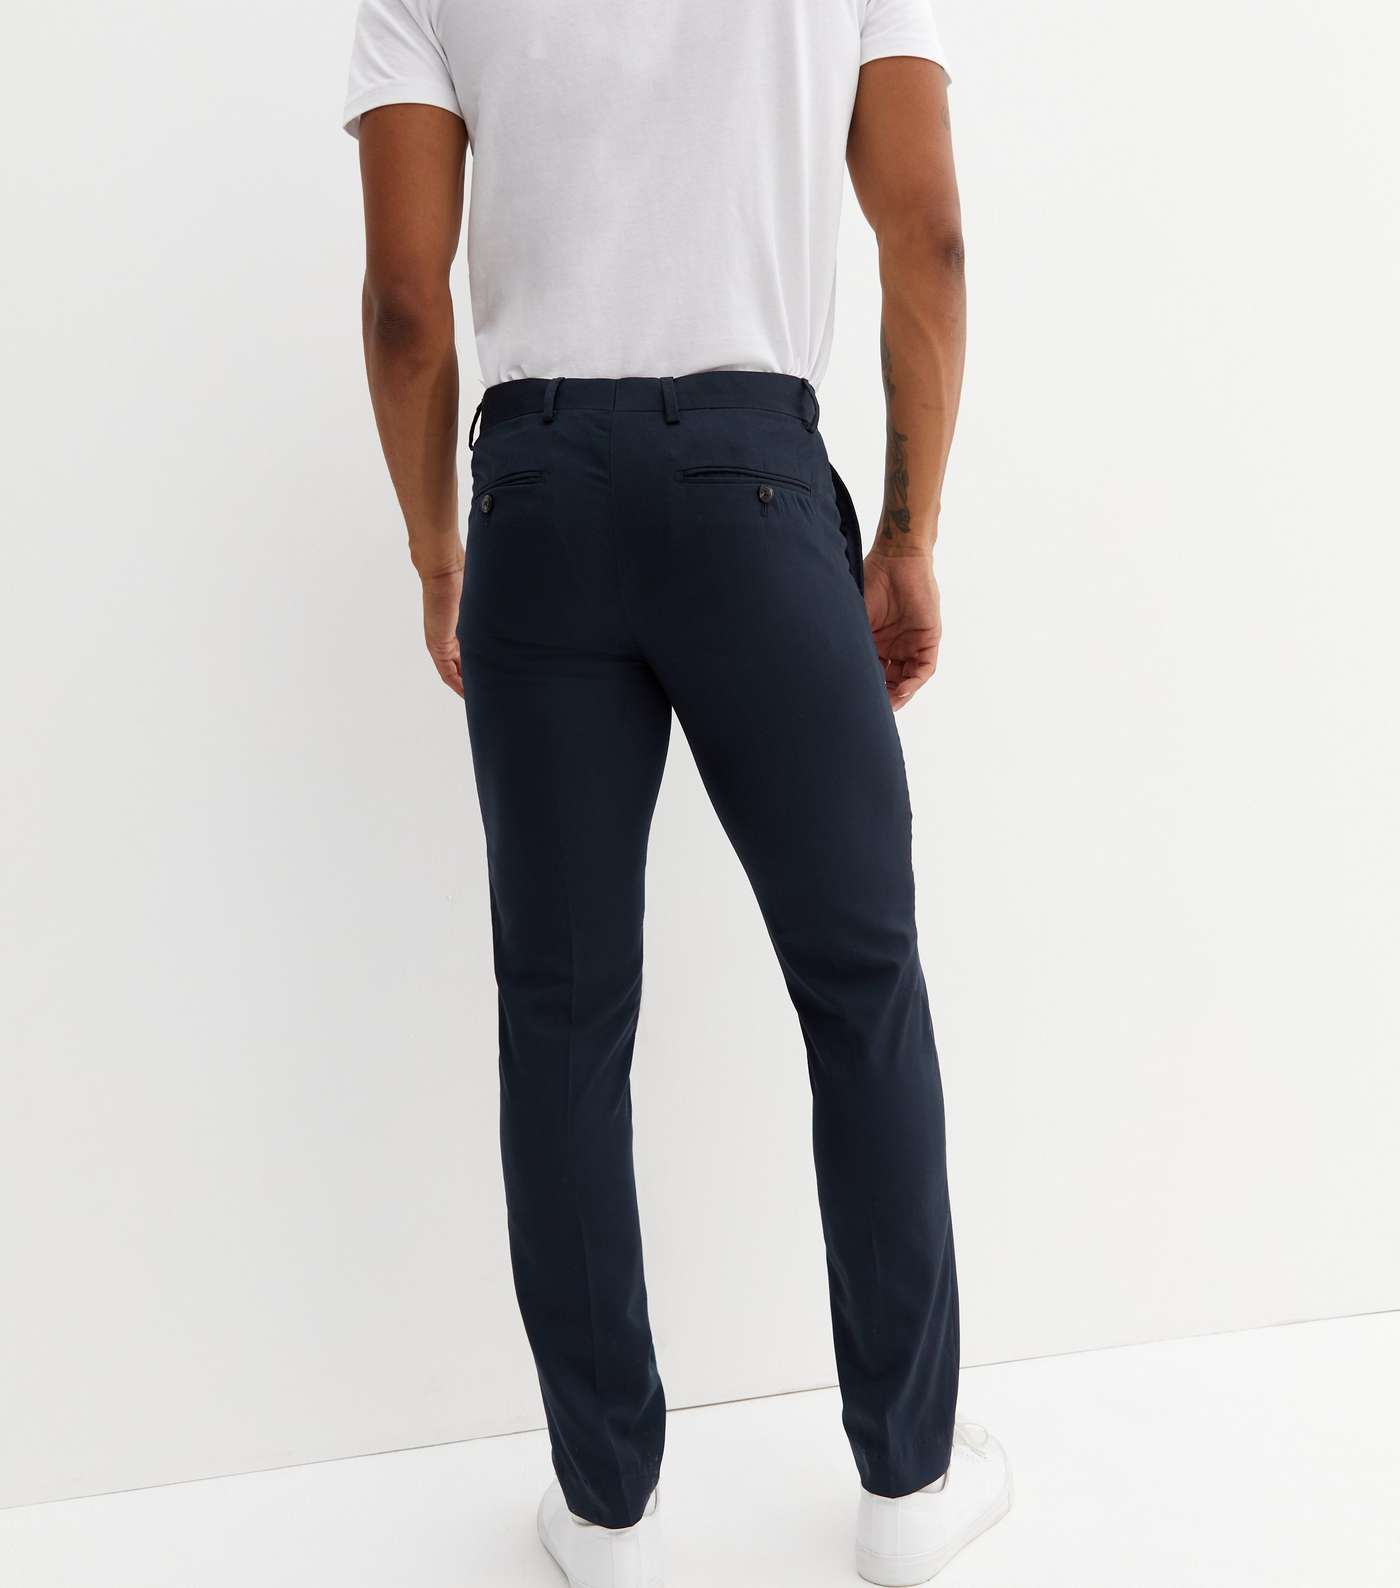 Jack & Jones Navy Skinny Fit Suit Trousers Image 4